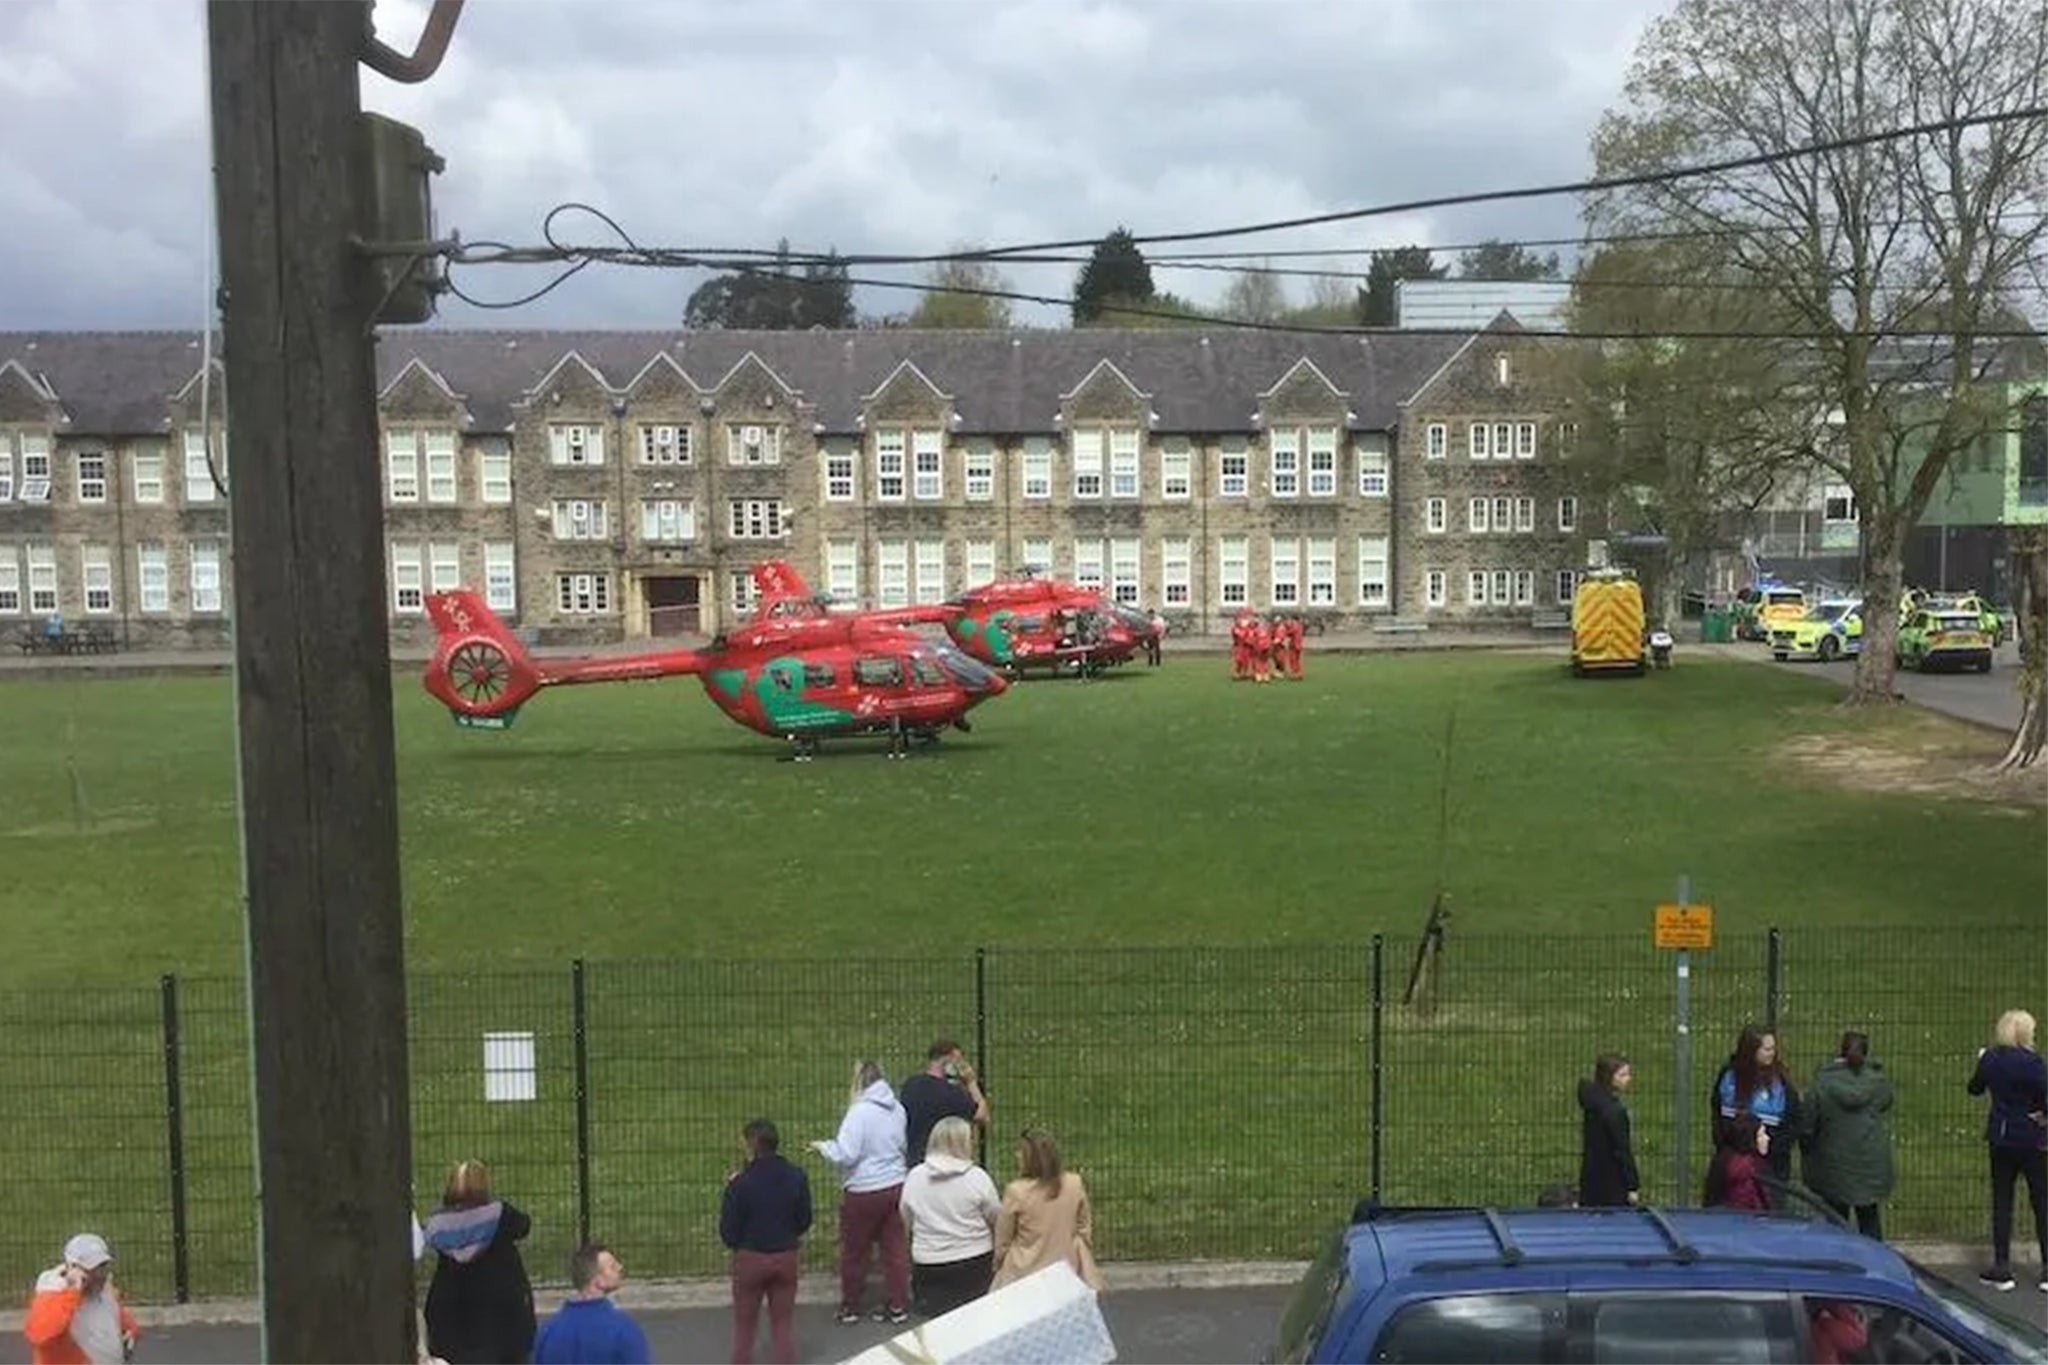 Air ambulances landed near the school on Wednesday